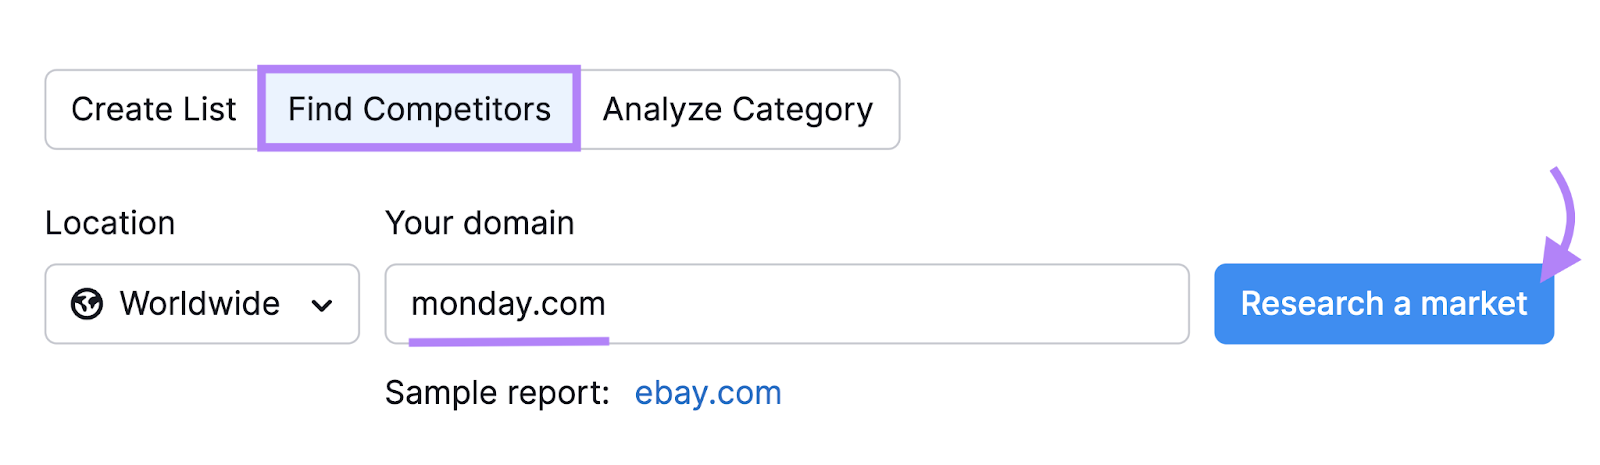 "monday.com" entered into the Market Explorer tool search bar